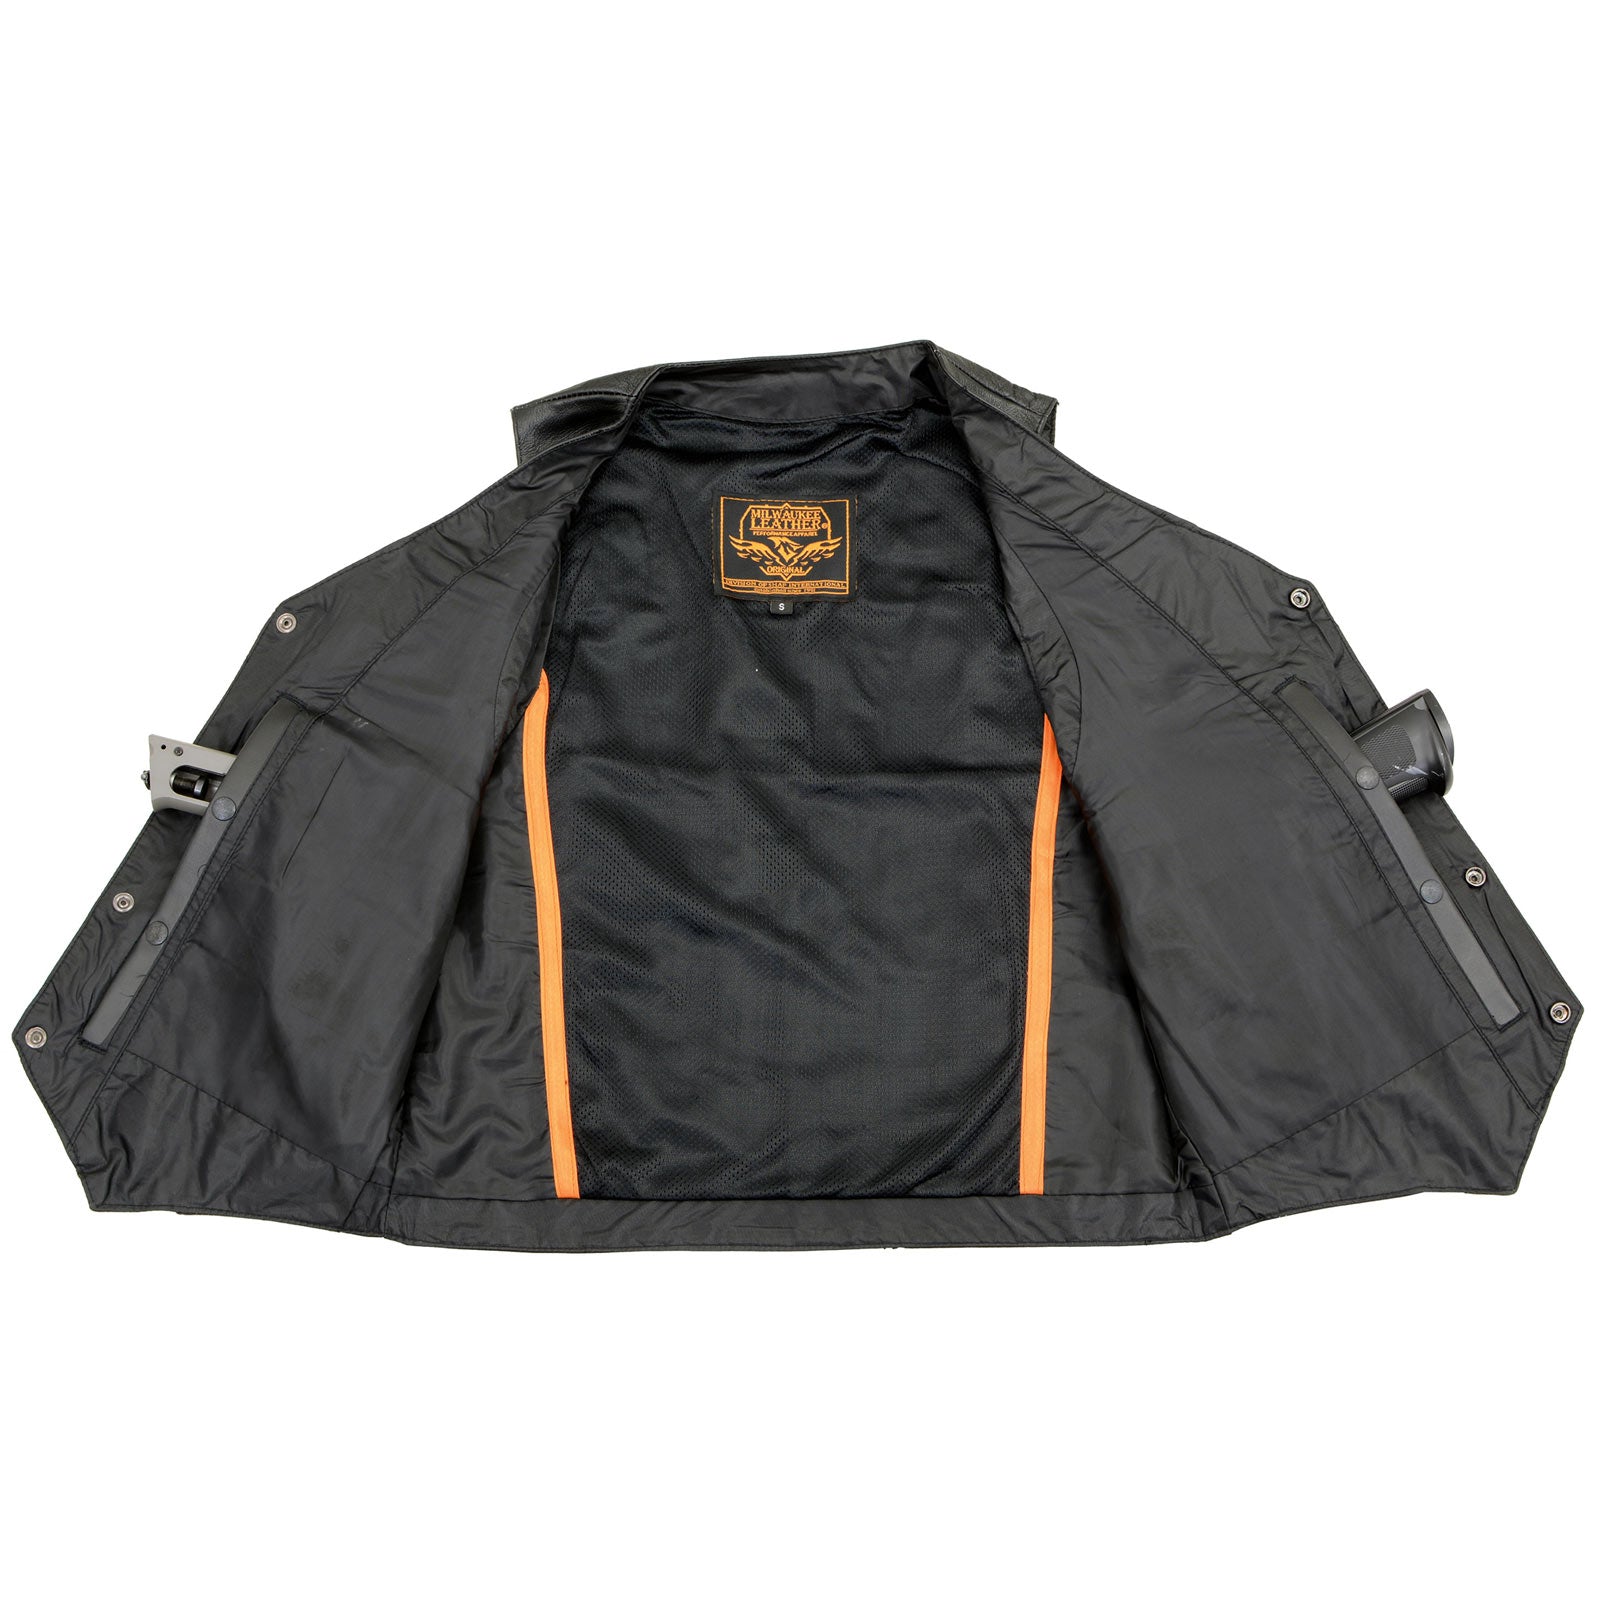 Milwaukee Leather LKM3700 Men's Black Leather Classic V-Neck Motorcycle Rider Vest w/ Buffalo Nickel Snaps Closure